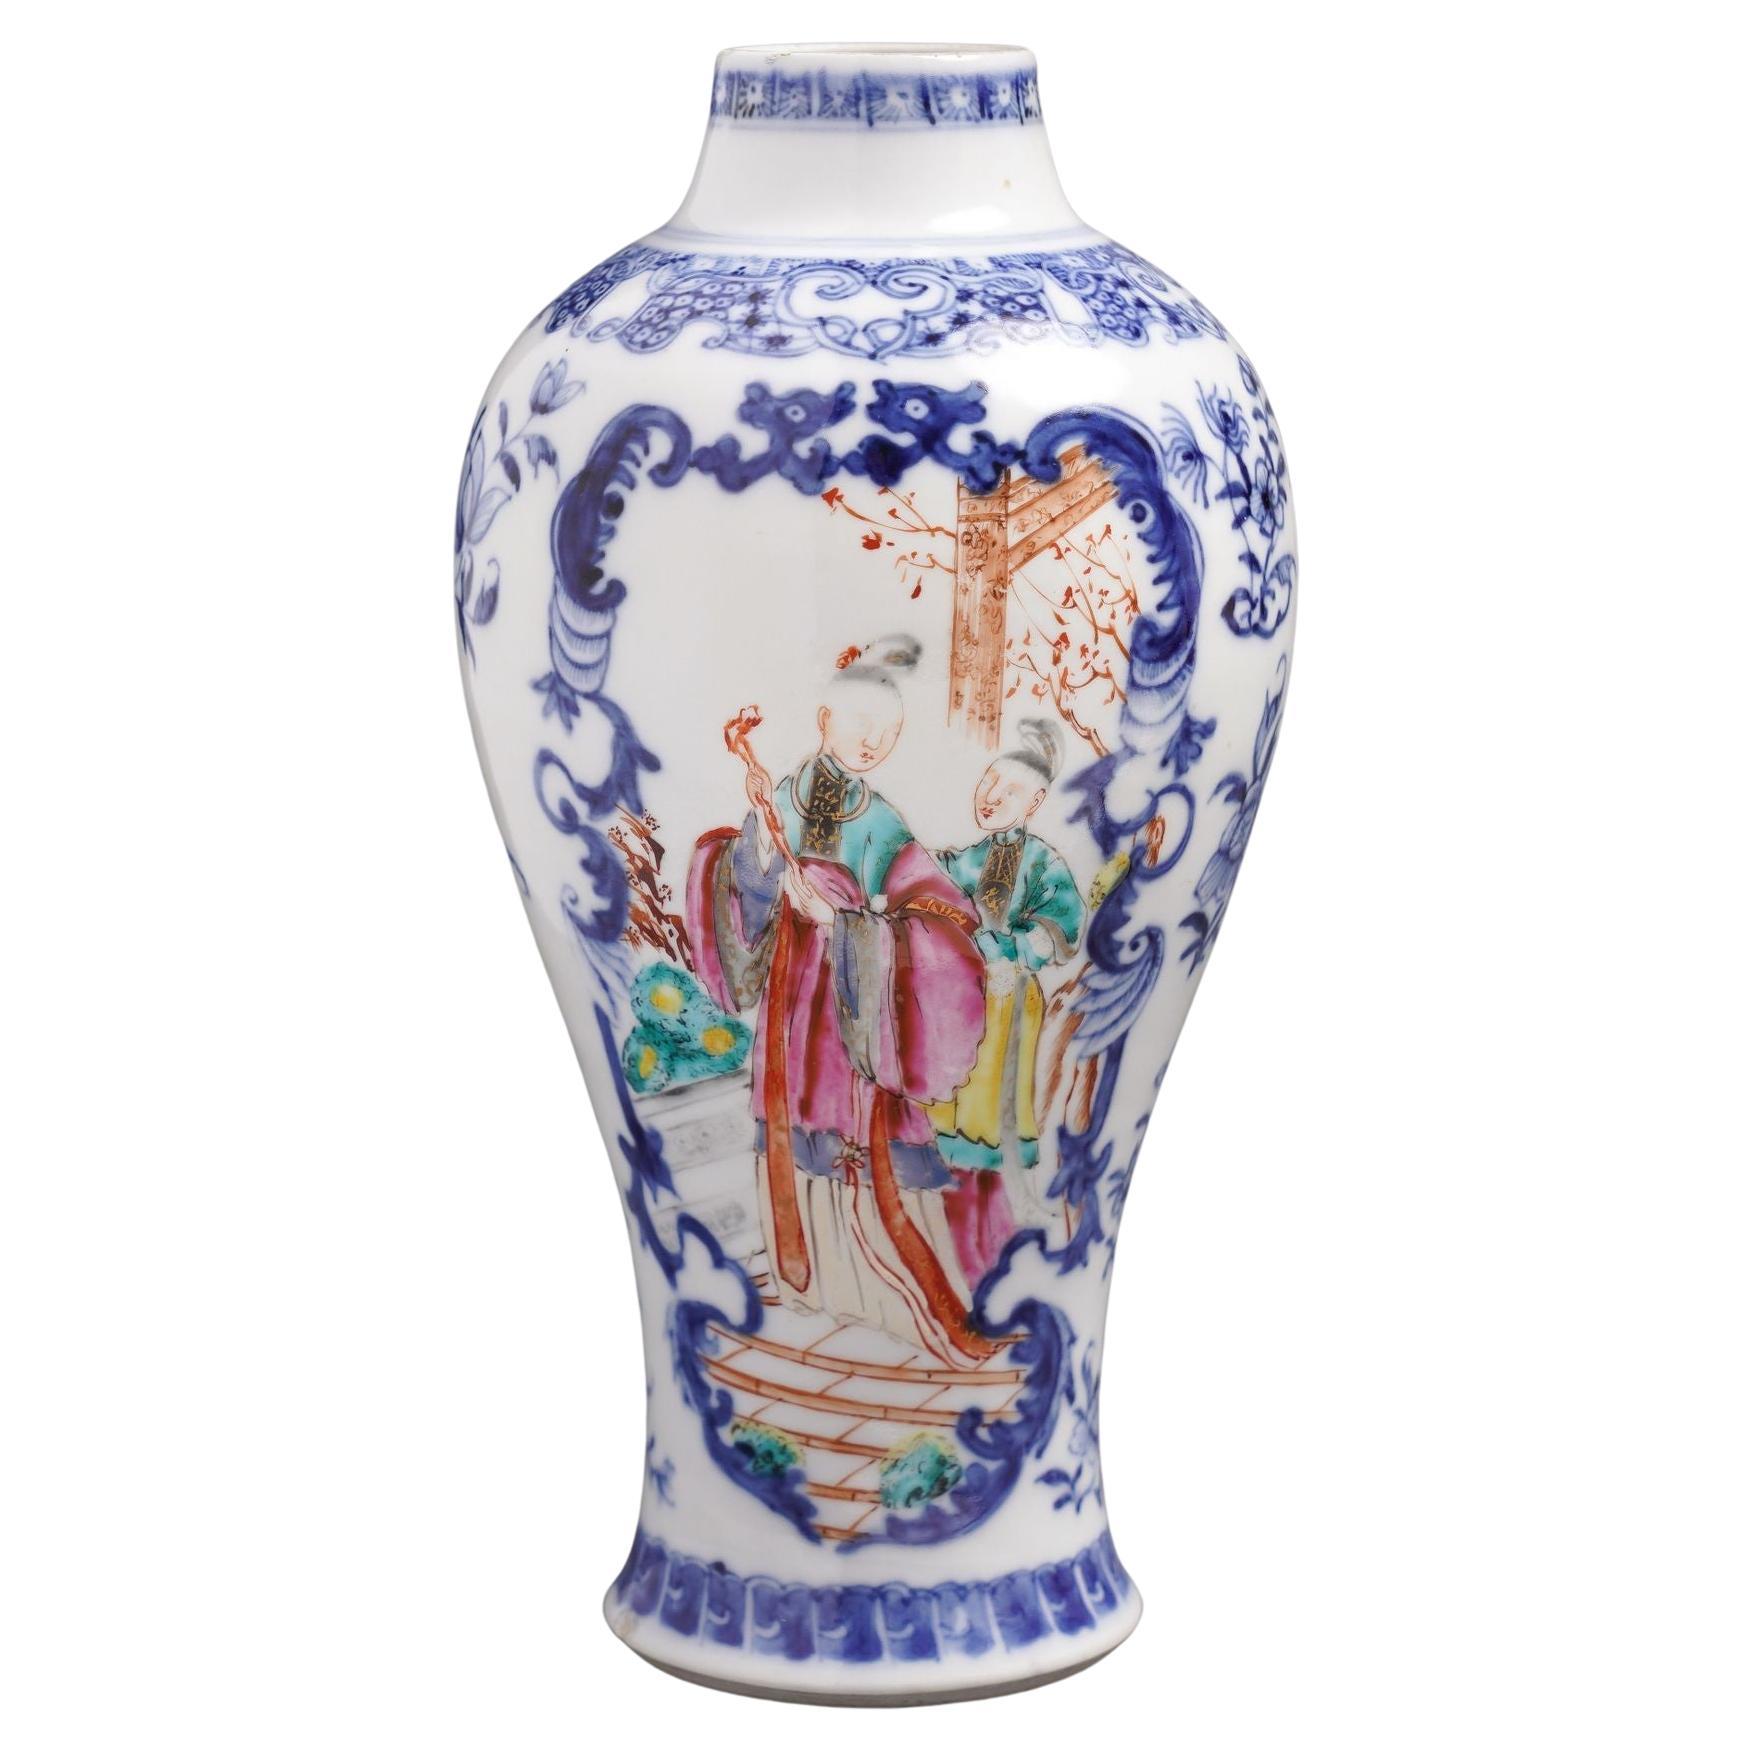 Chinese export baluster form garniture vase with figural scenes, c. 1780